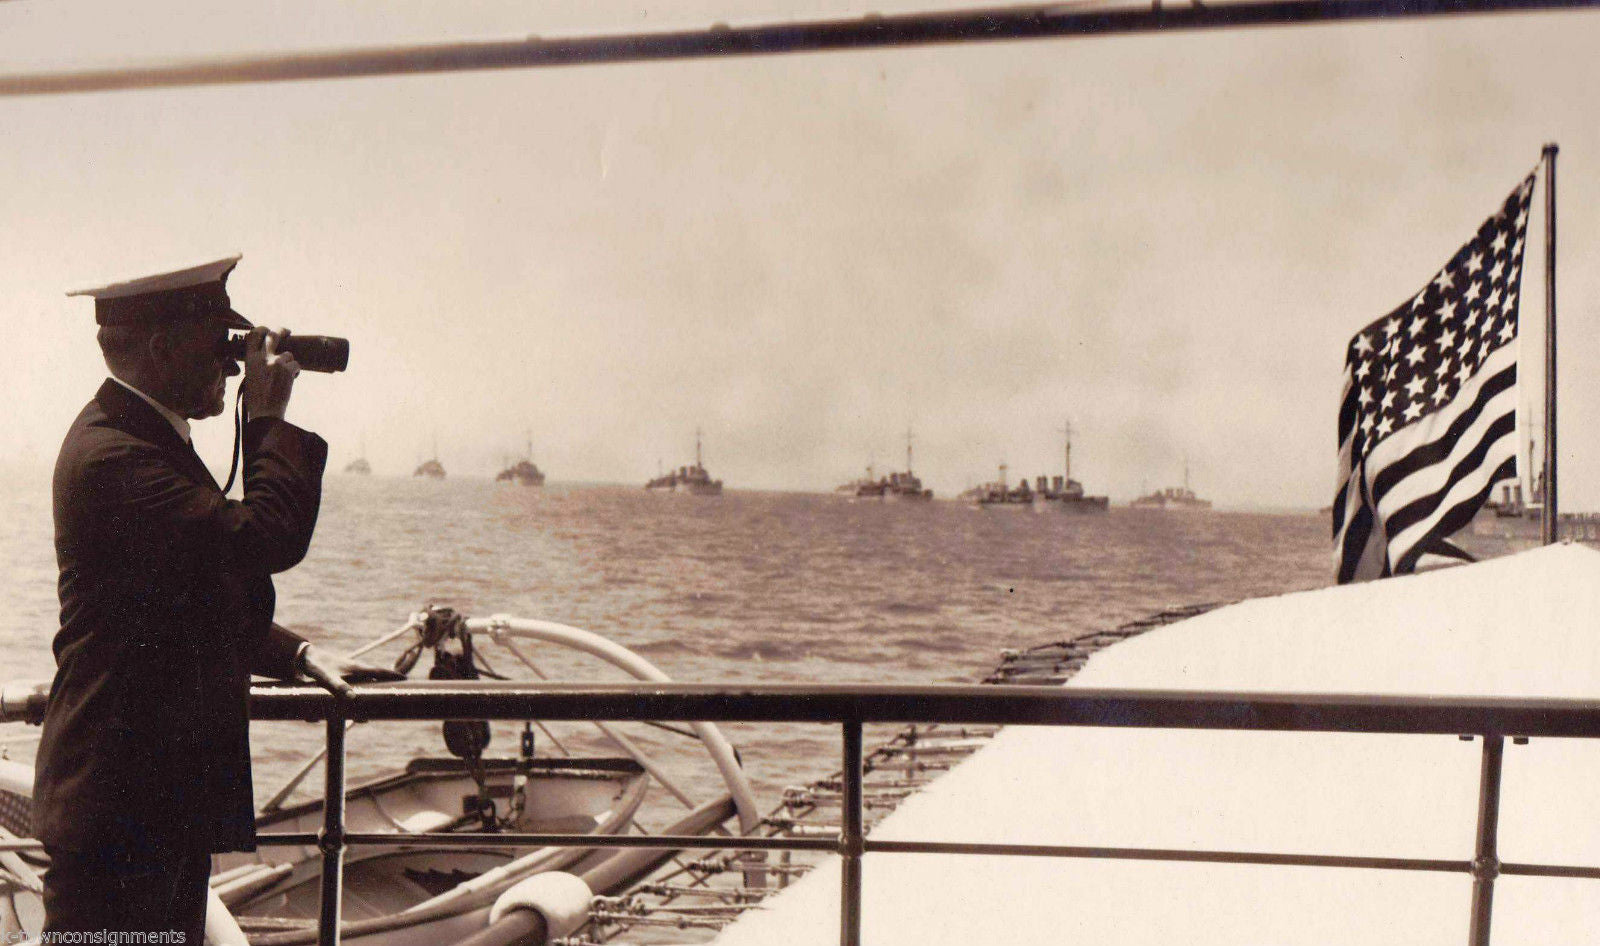 President Coolidge Battleship Fleet American Flag Vintage 1920s News Press Photo - K-townConsignments